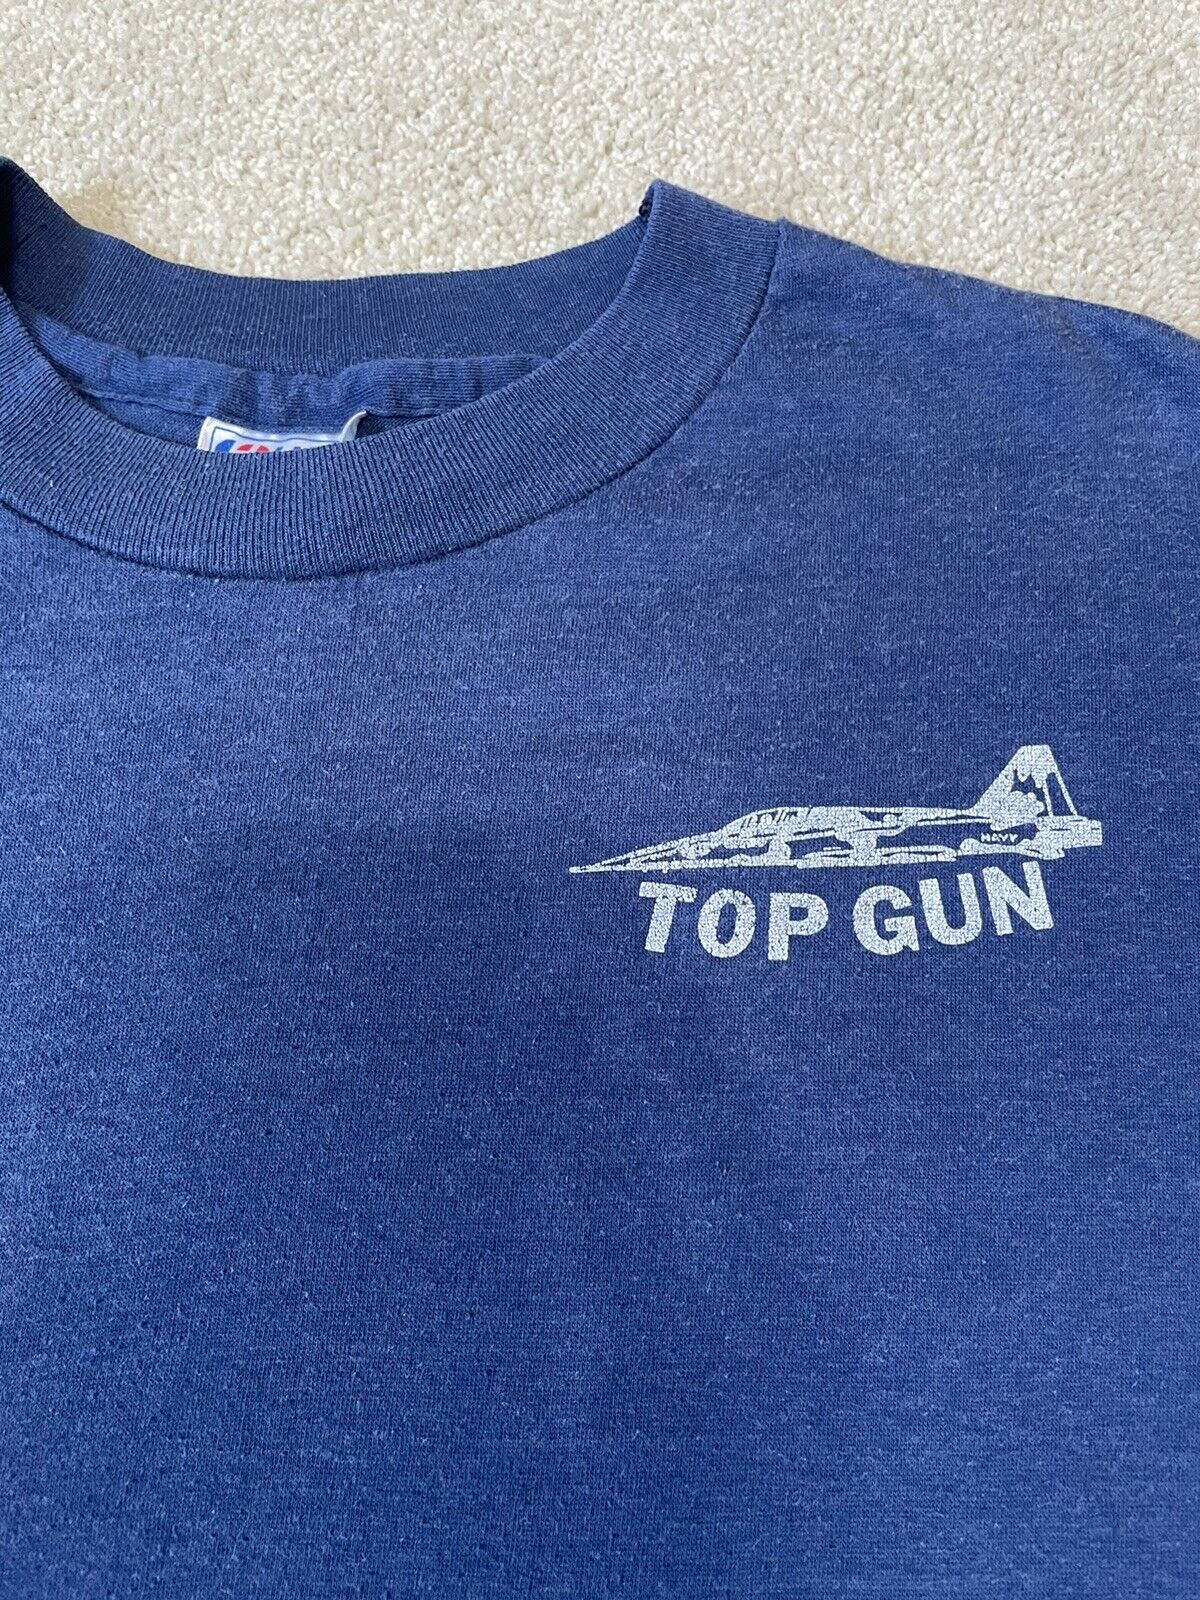 Descipt US Fits Blue Gun Shirt eBay Navy Original Adult | Navy Top Vintage See Small T